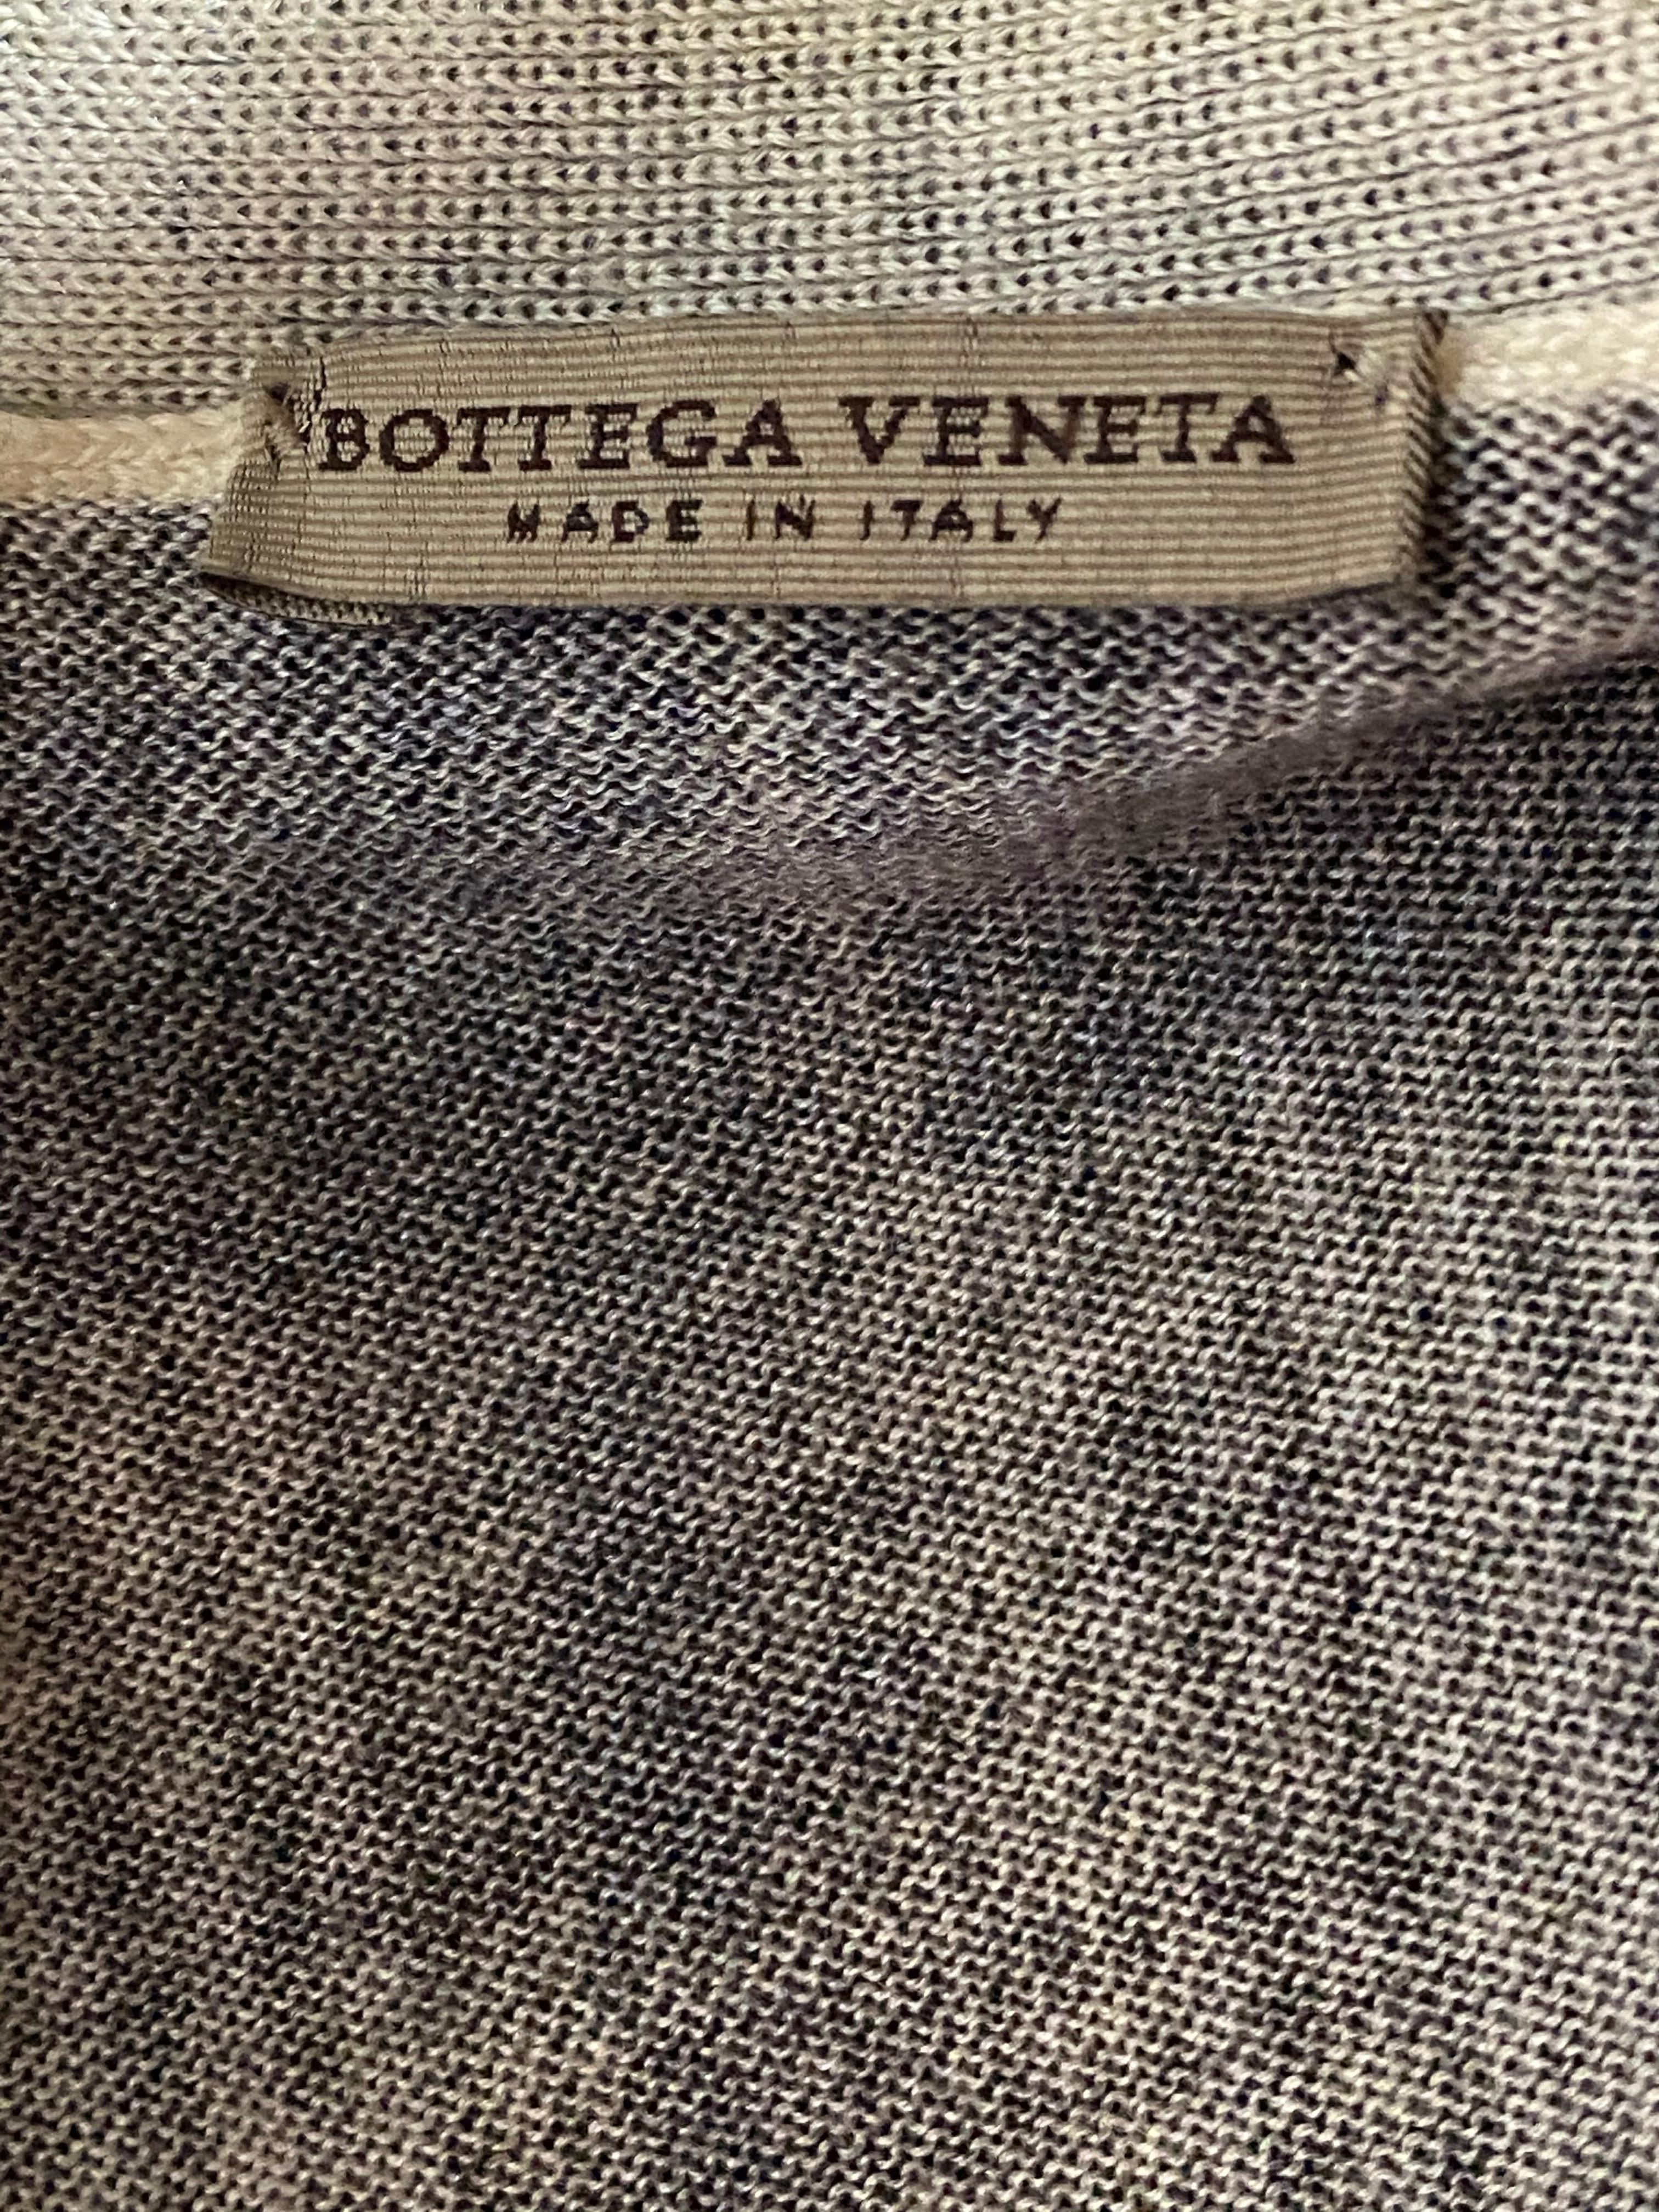 Gray Bottega Veneta Grey and Green Cashmere and Silk Plaid Cardigan Sweater  For Sale